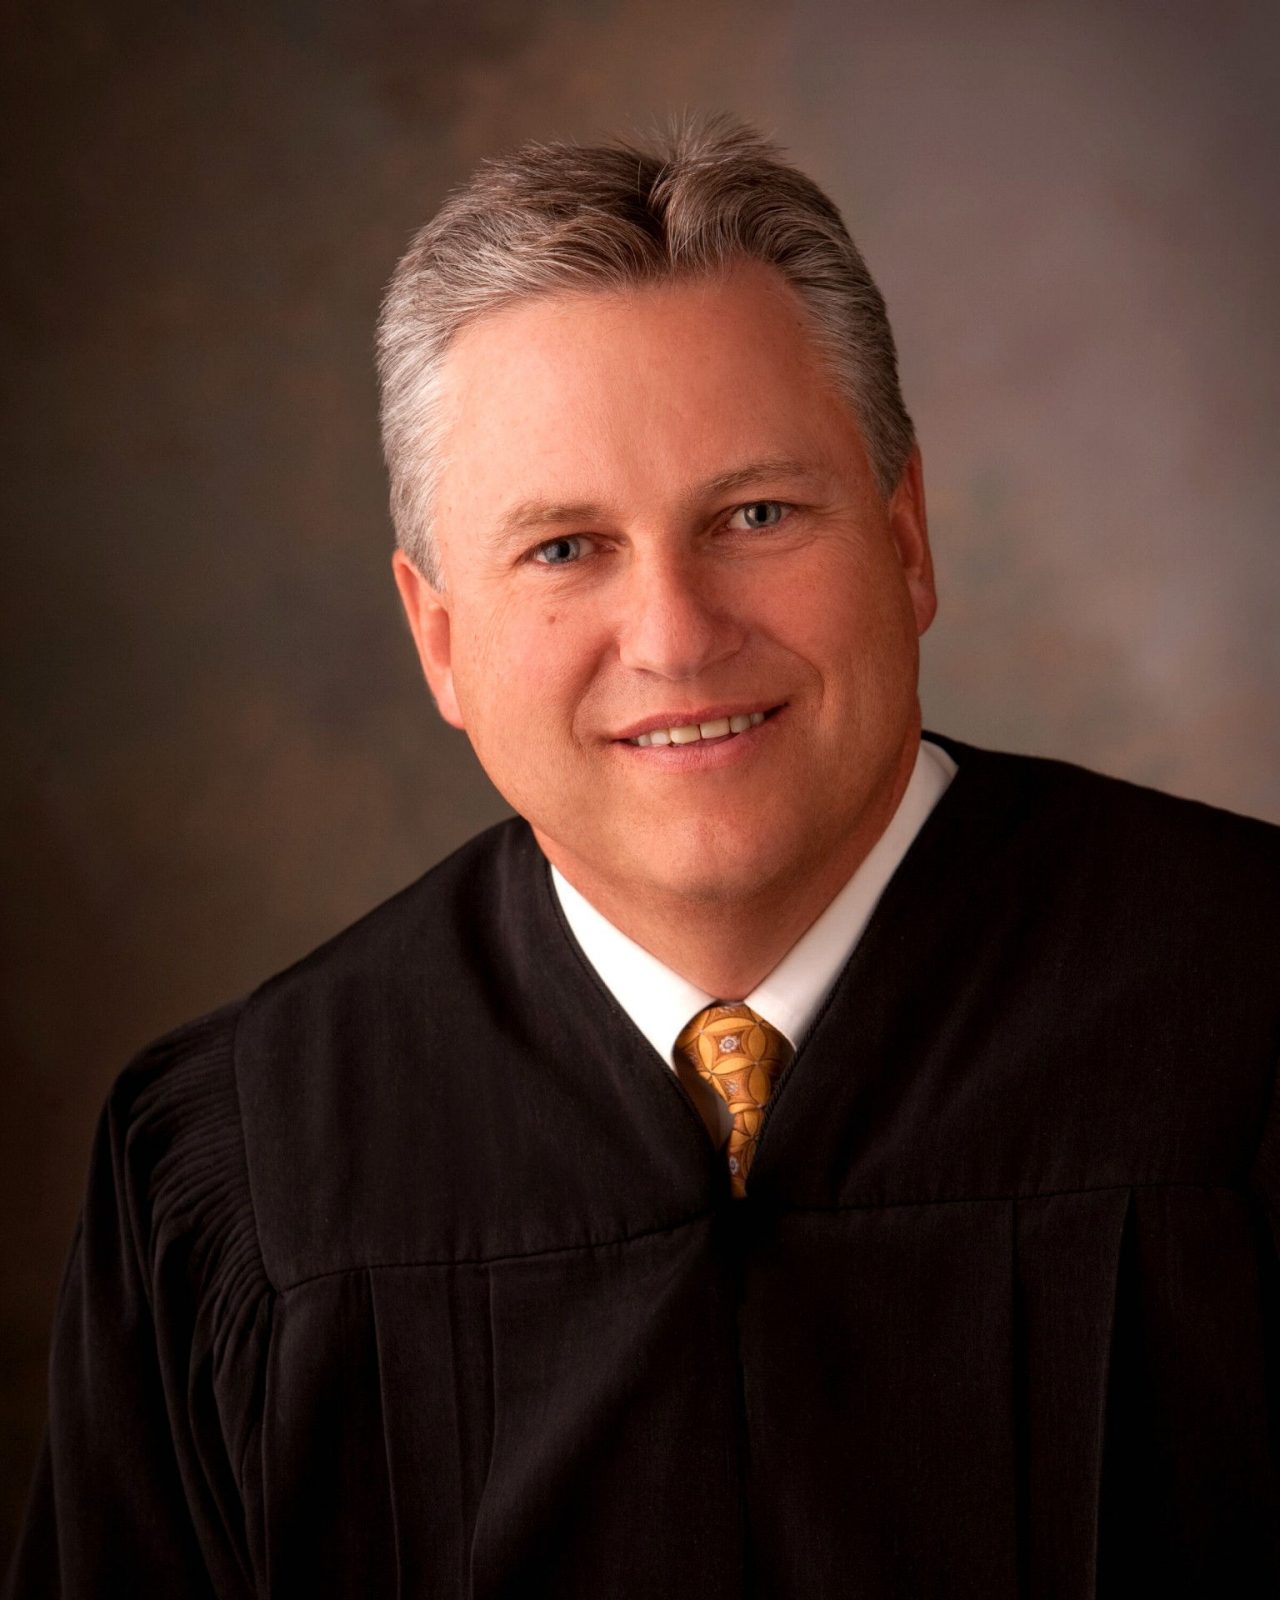 PRESIDING JUDGE MARVIN D. BAGLEY